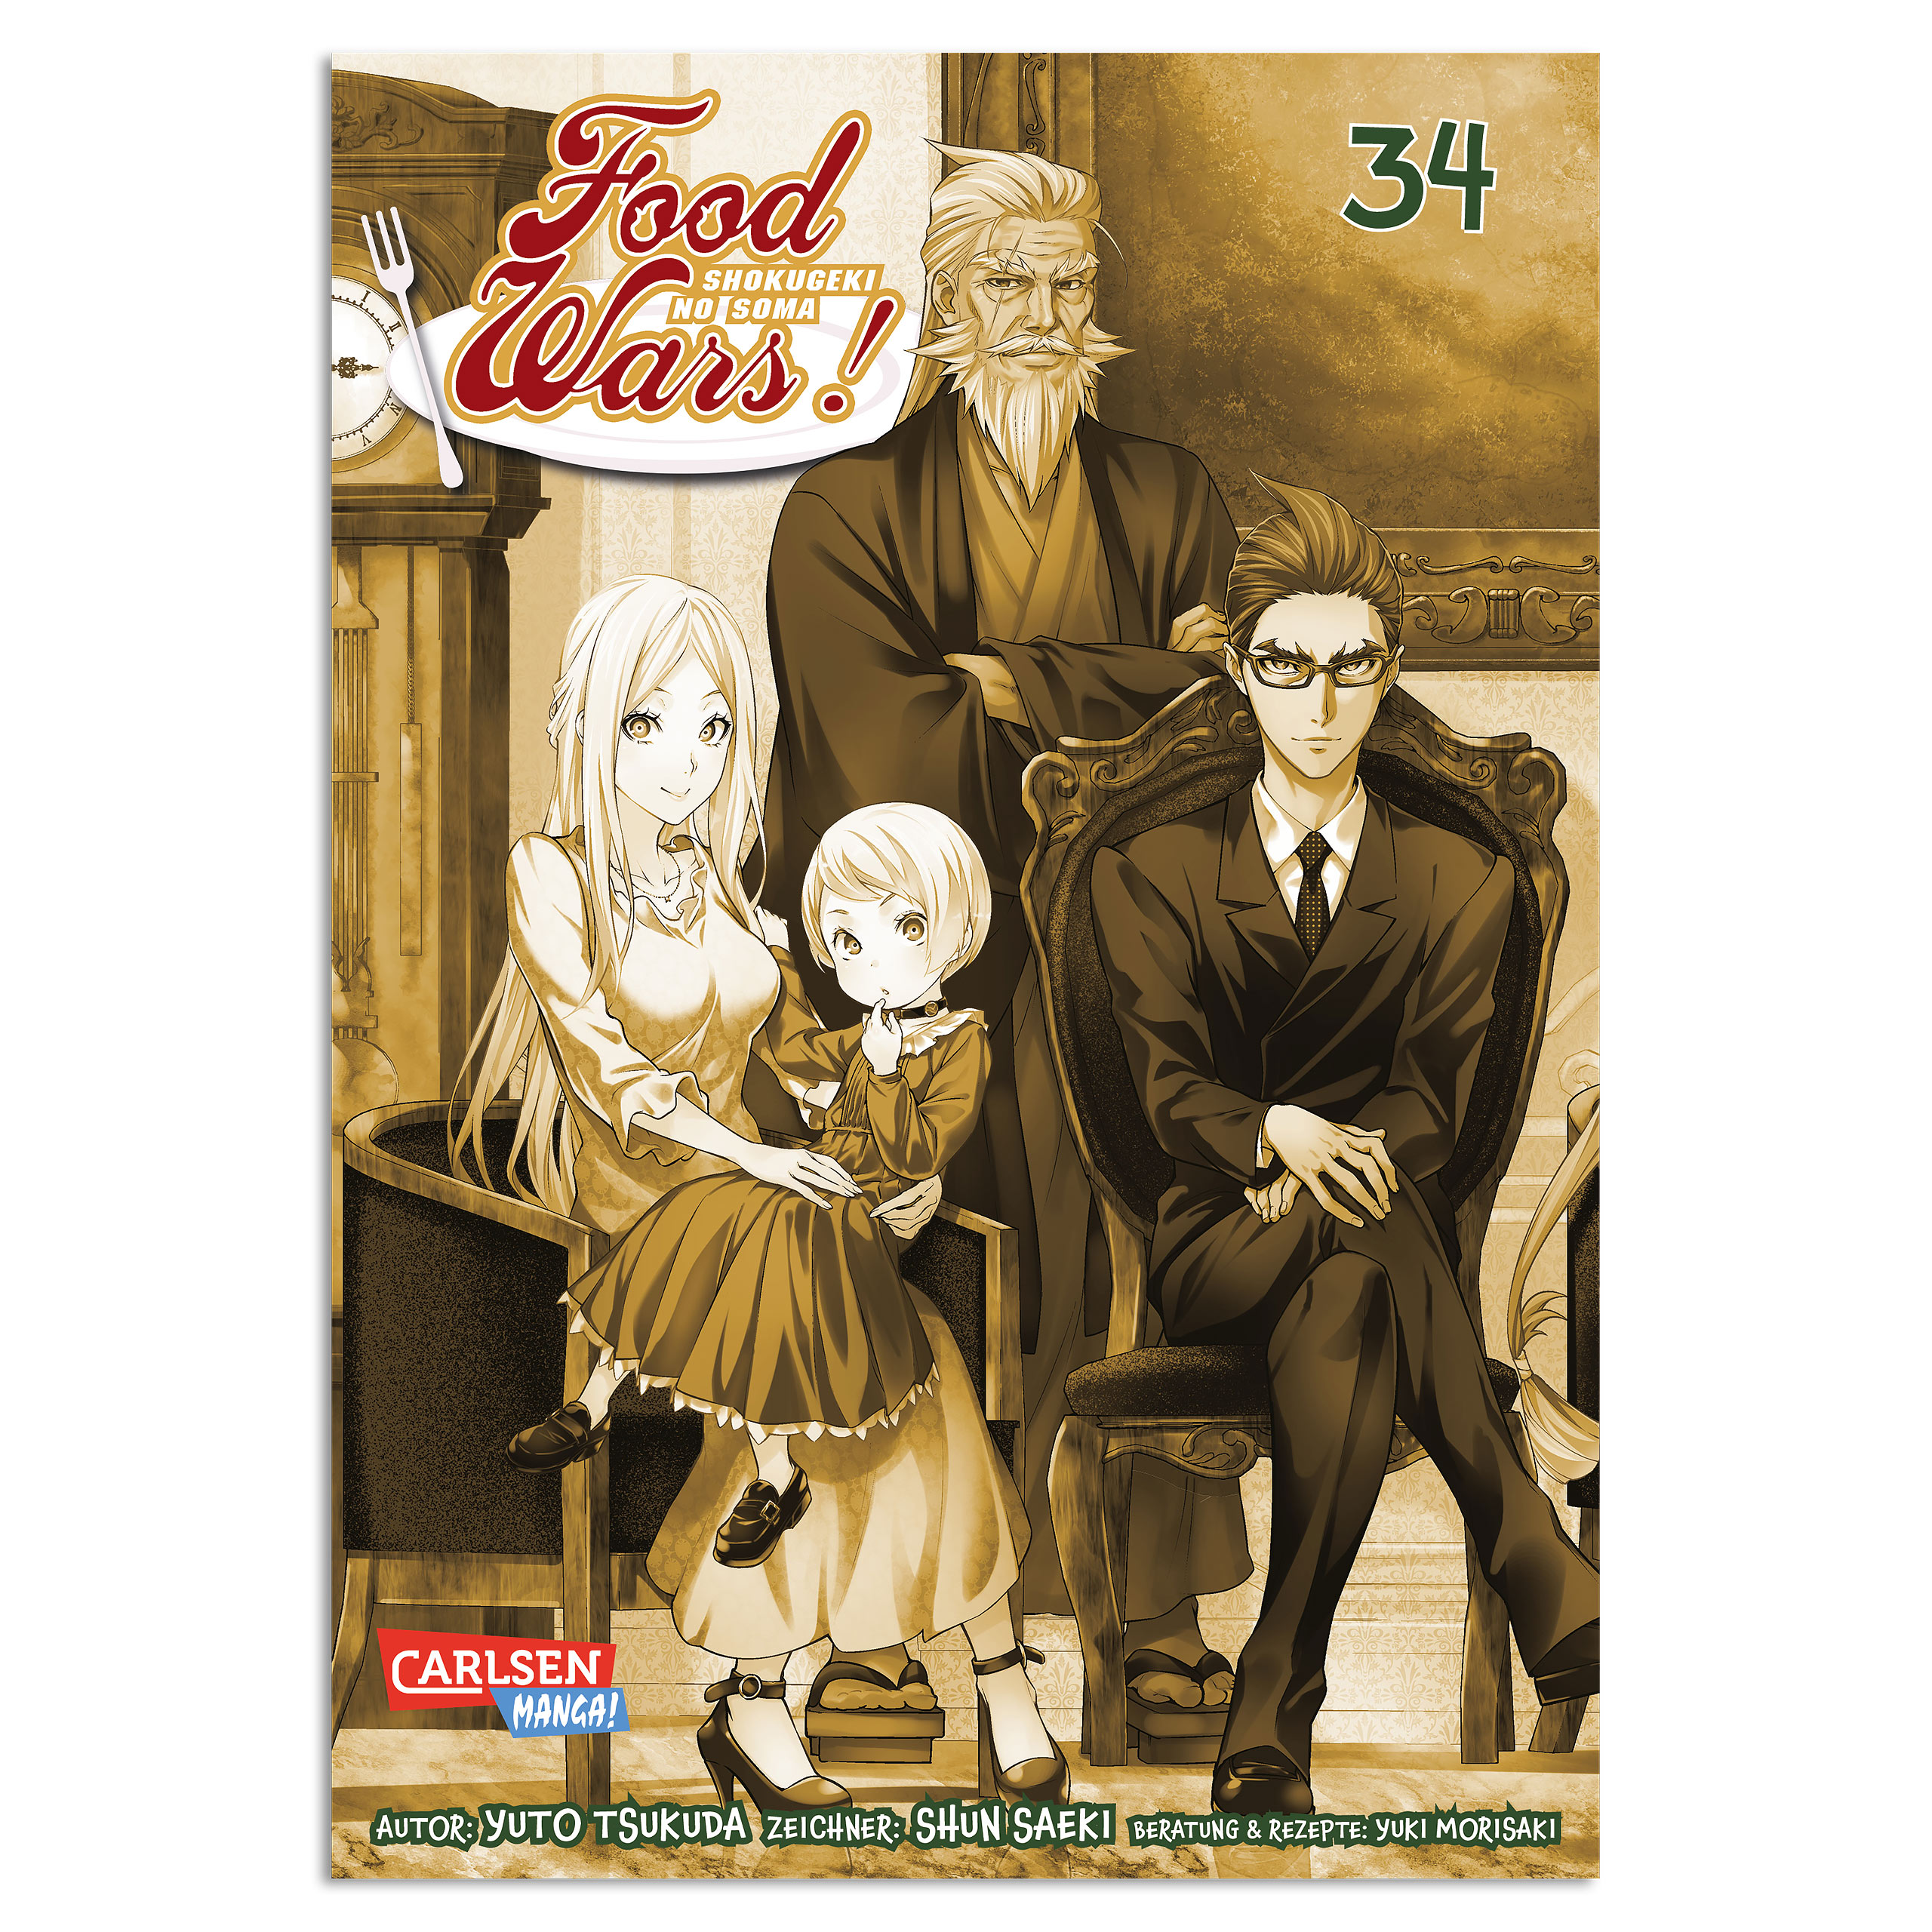 Food Wars - Shokugeki No Soma Volume 34 Paperback